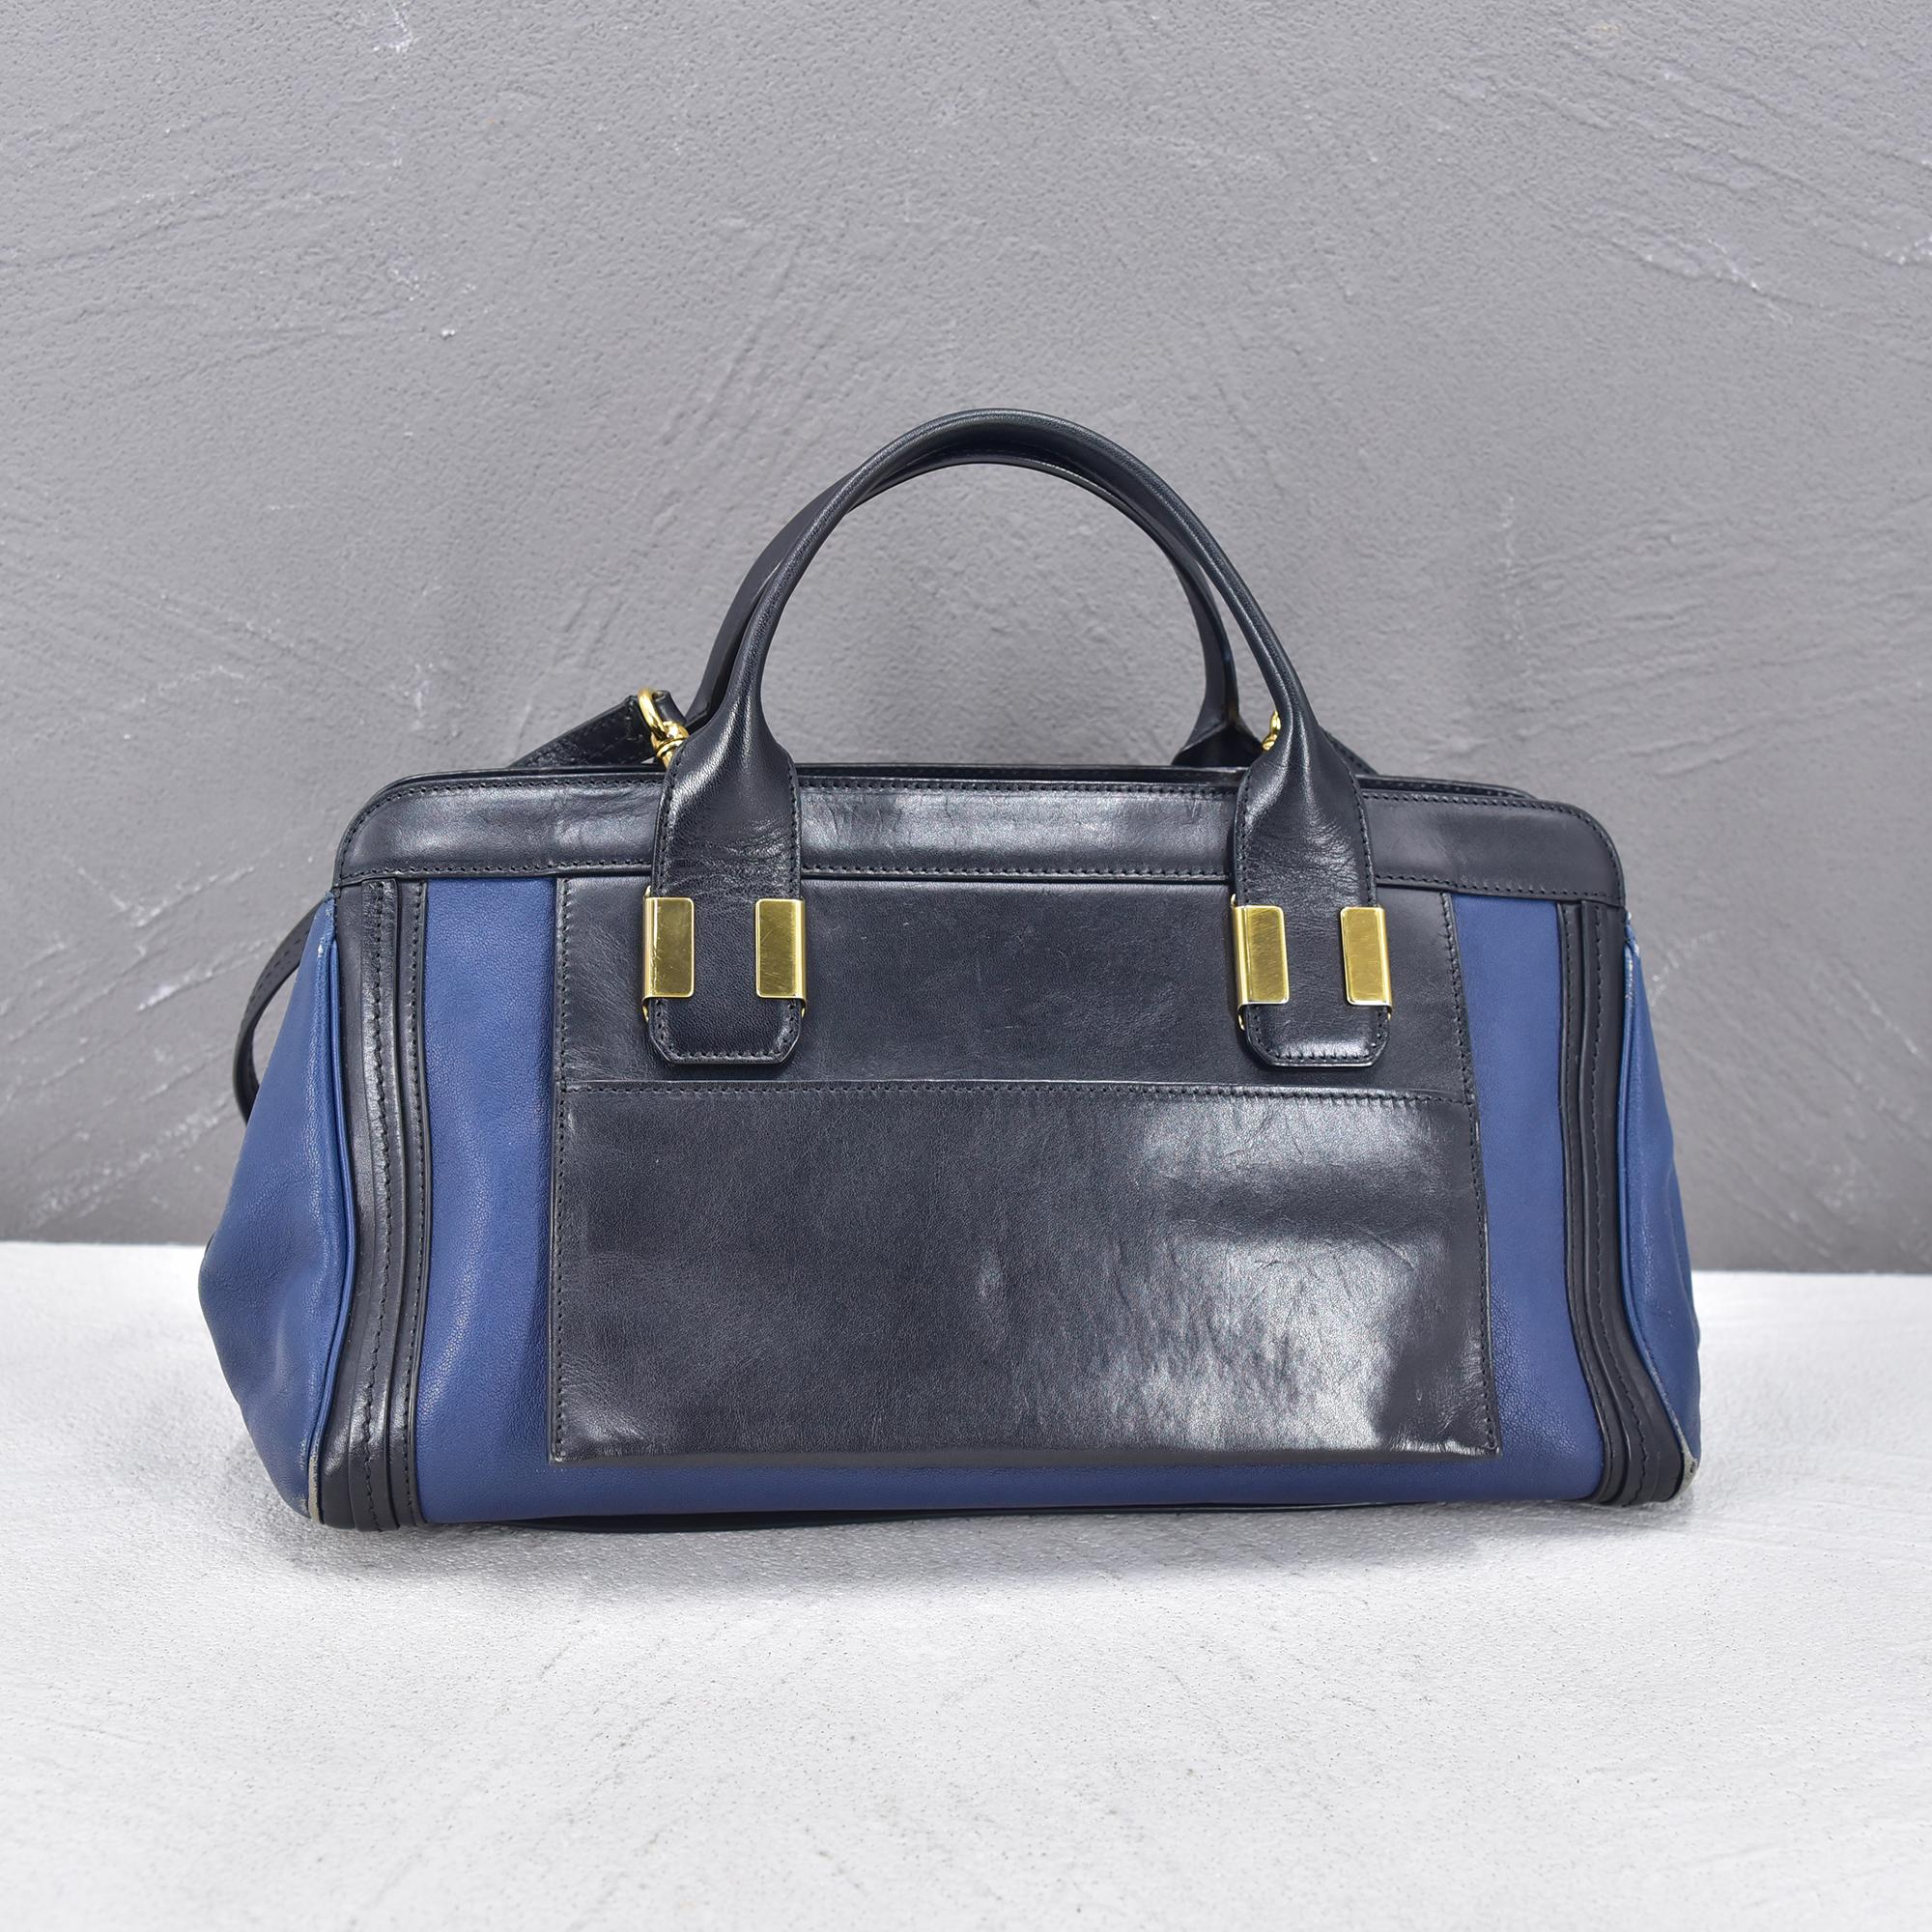 Alice Leather Handbag